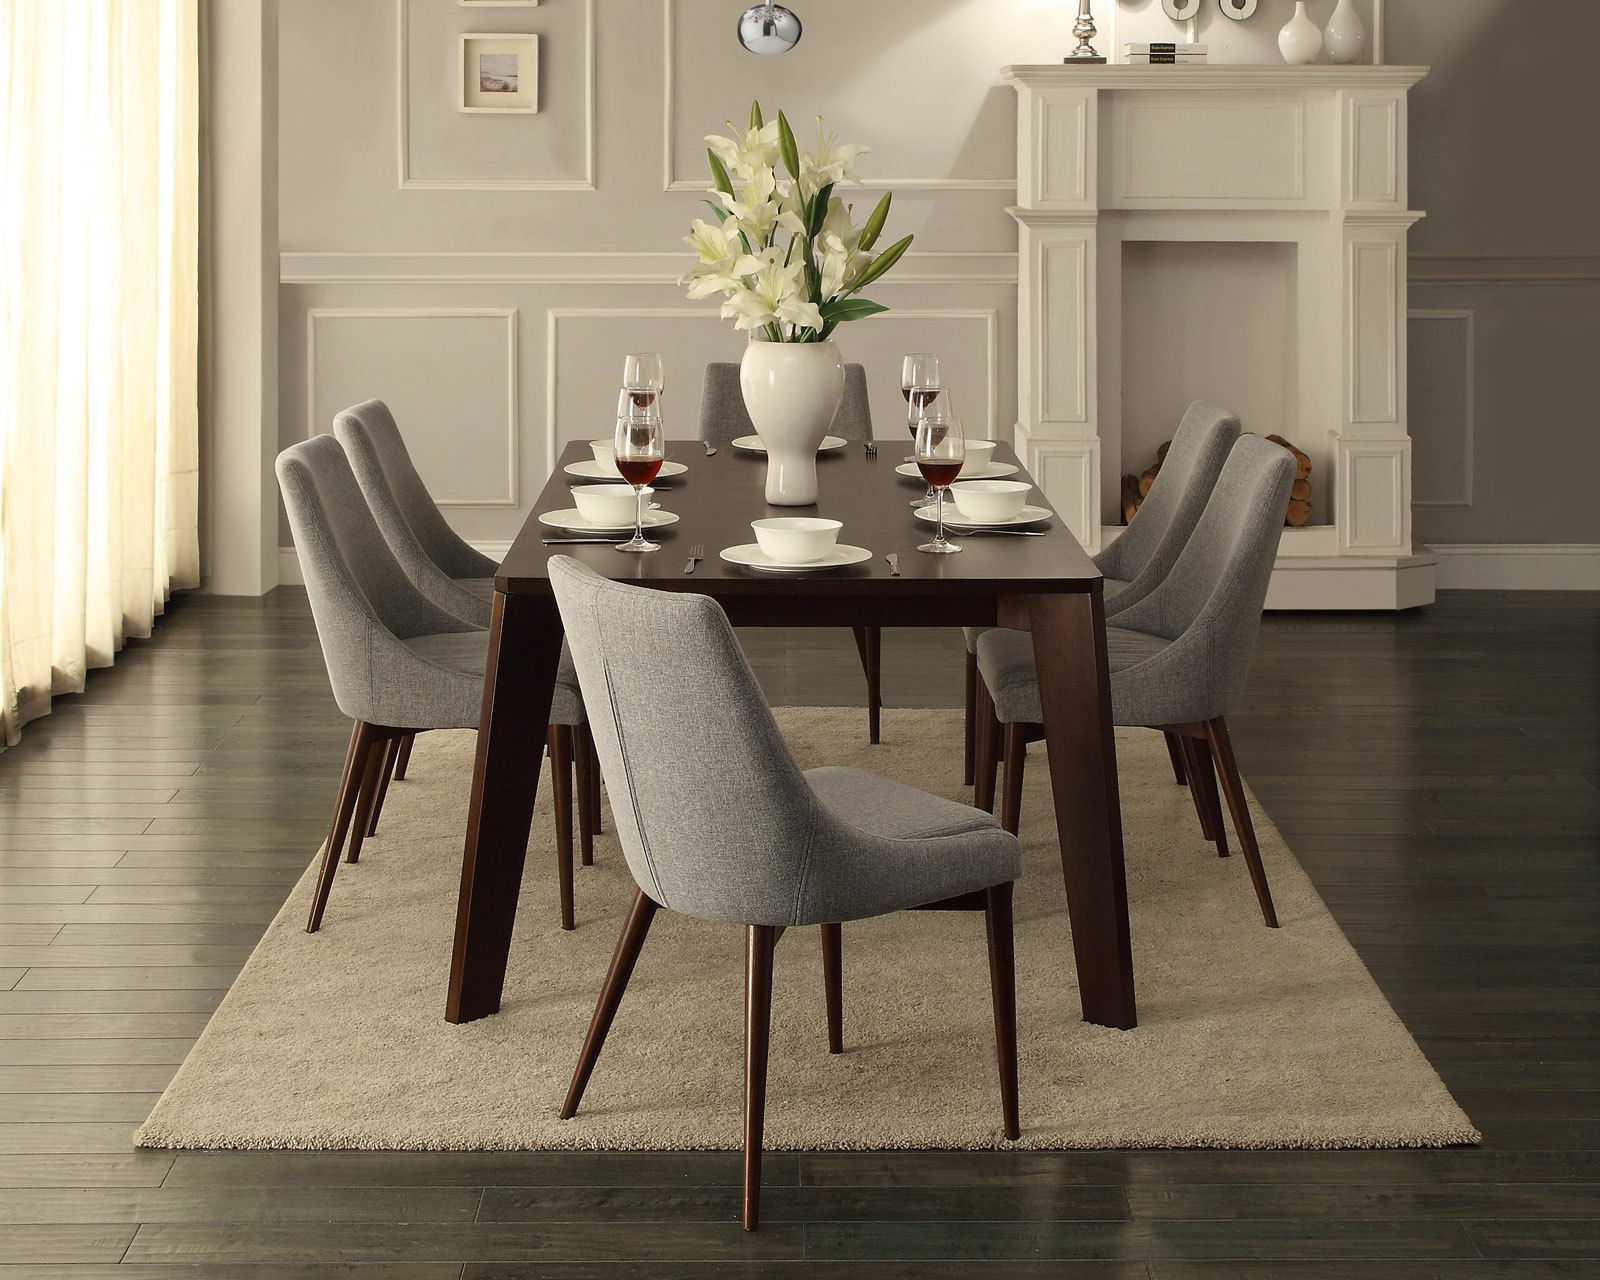 LANKINS - 7pcs Classic Modern Rectangular Dining Room Table Chairs Set